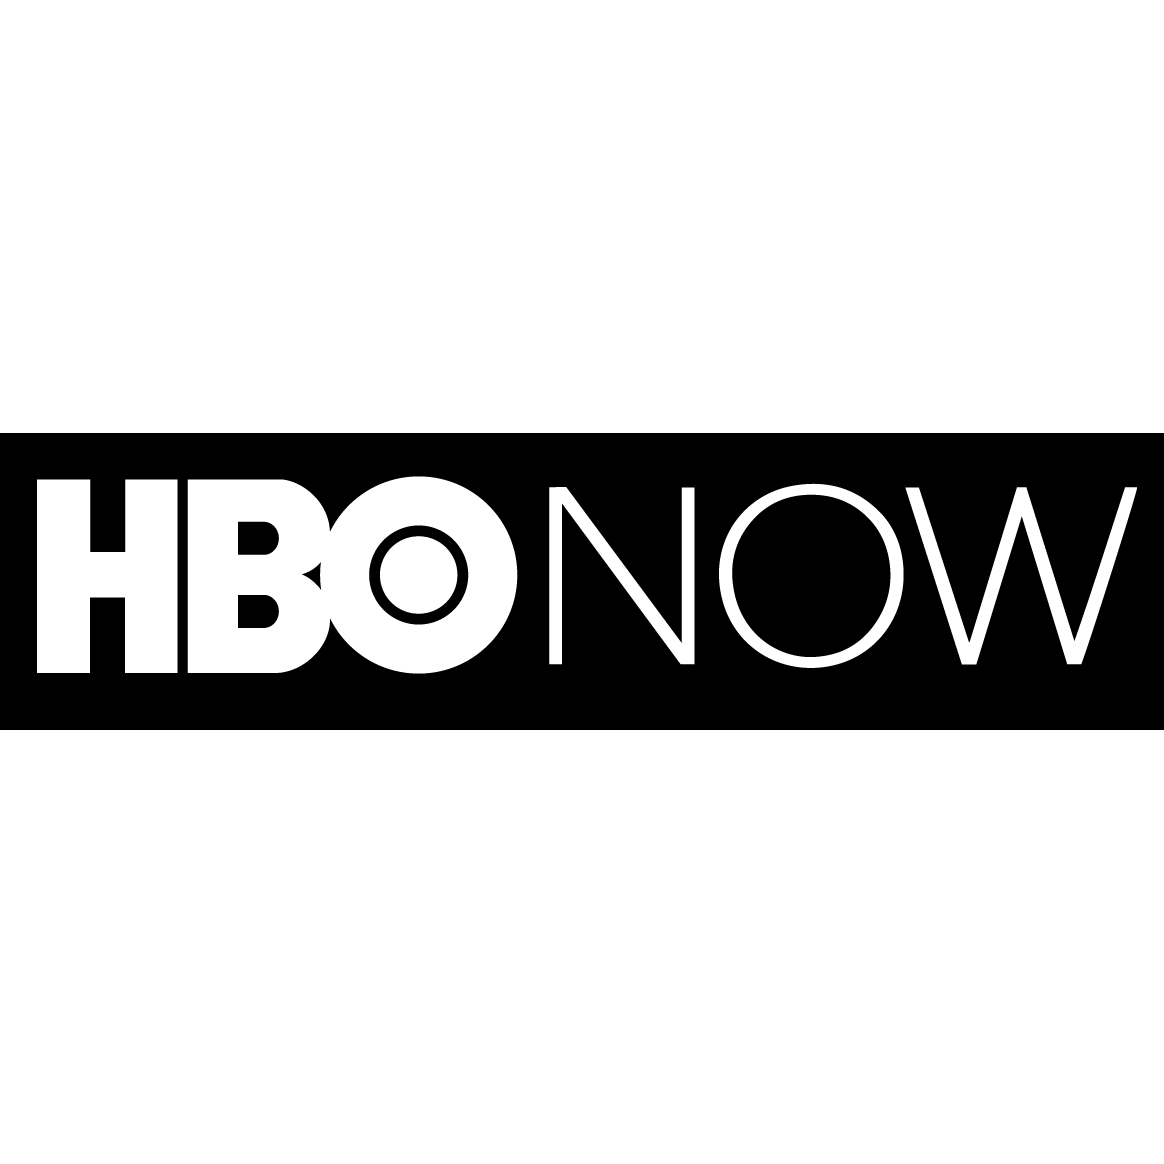 HBO now logo